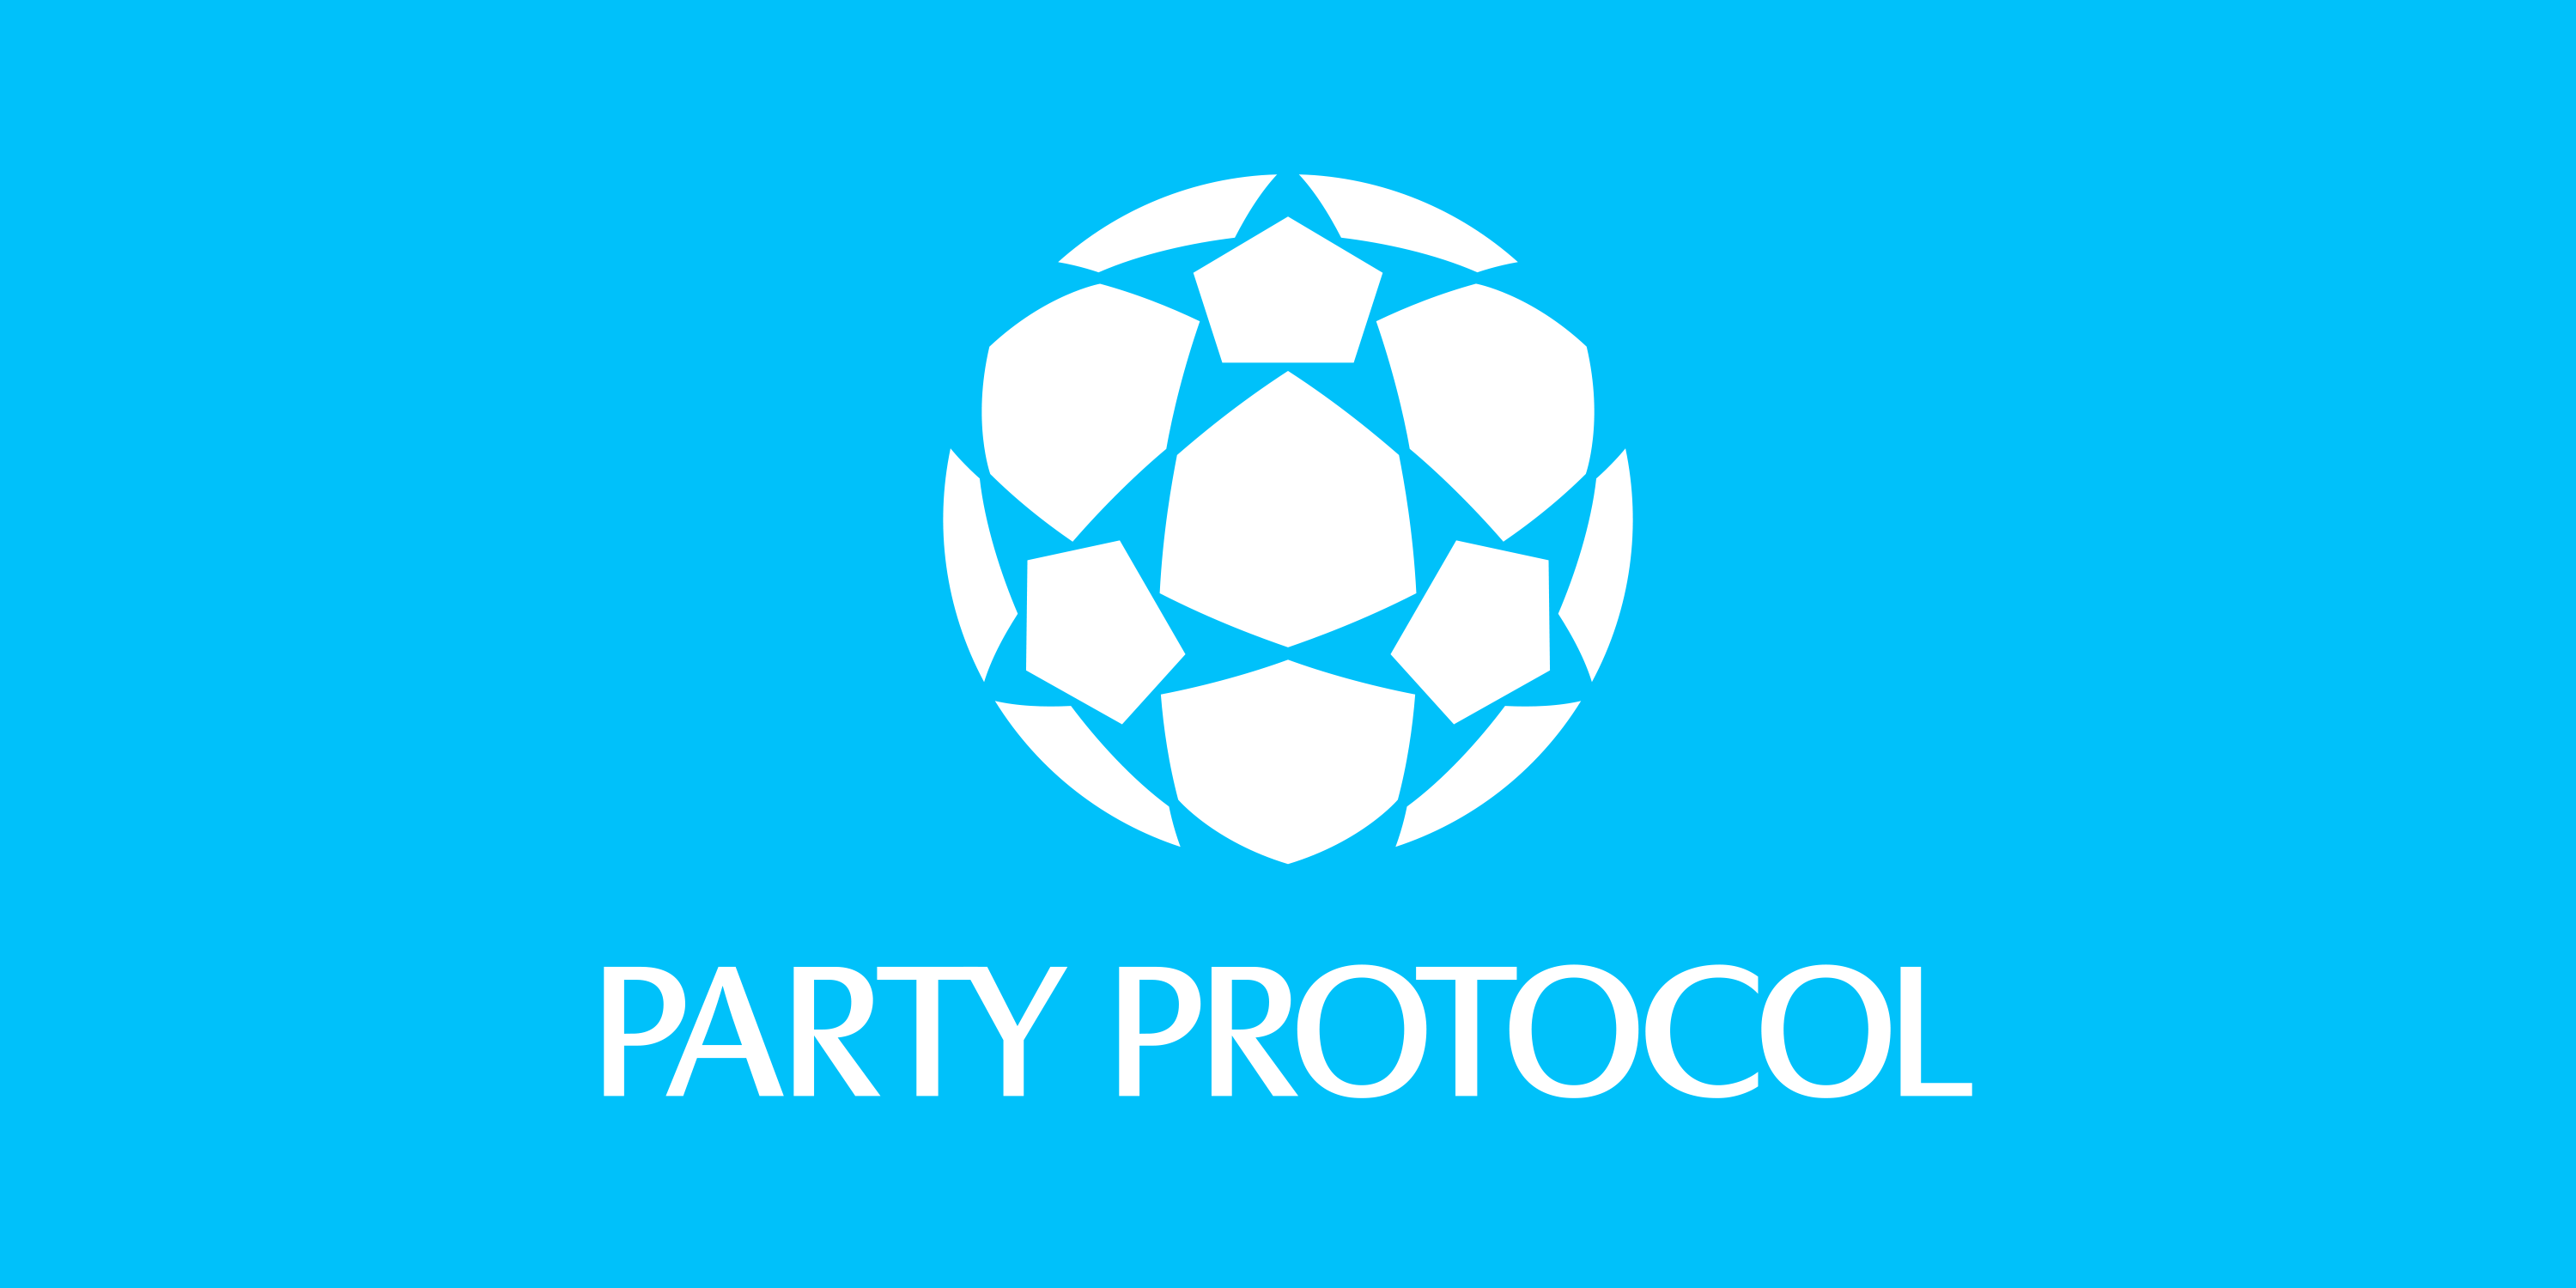 Party Protocol